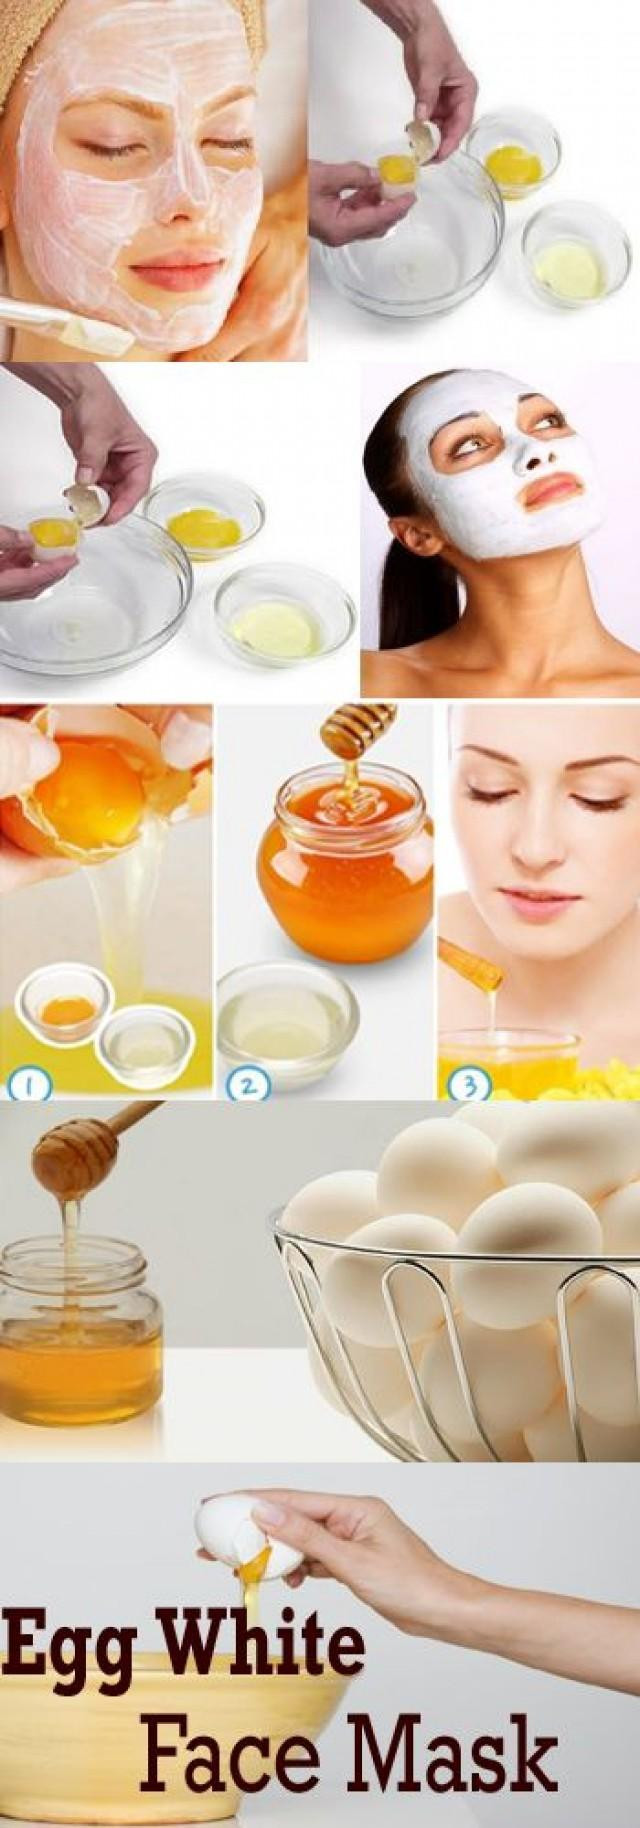 Egg White Mask DIY
 Health And Beauty Egg White Face Mask Weddbook